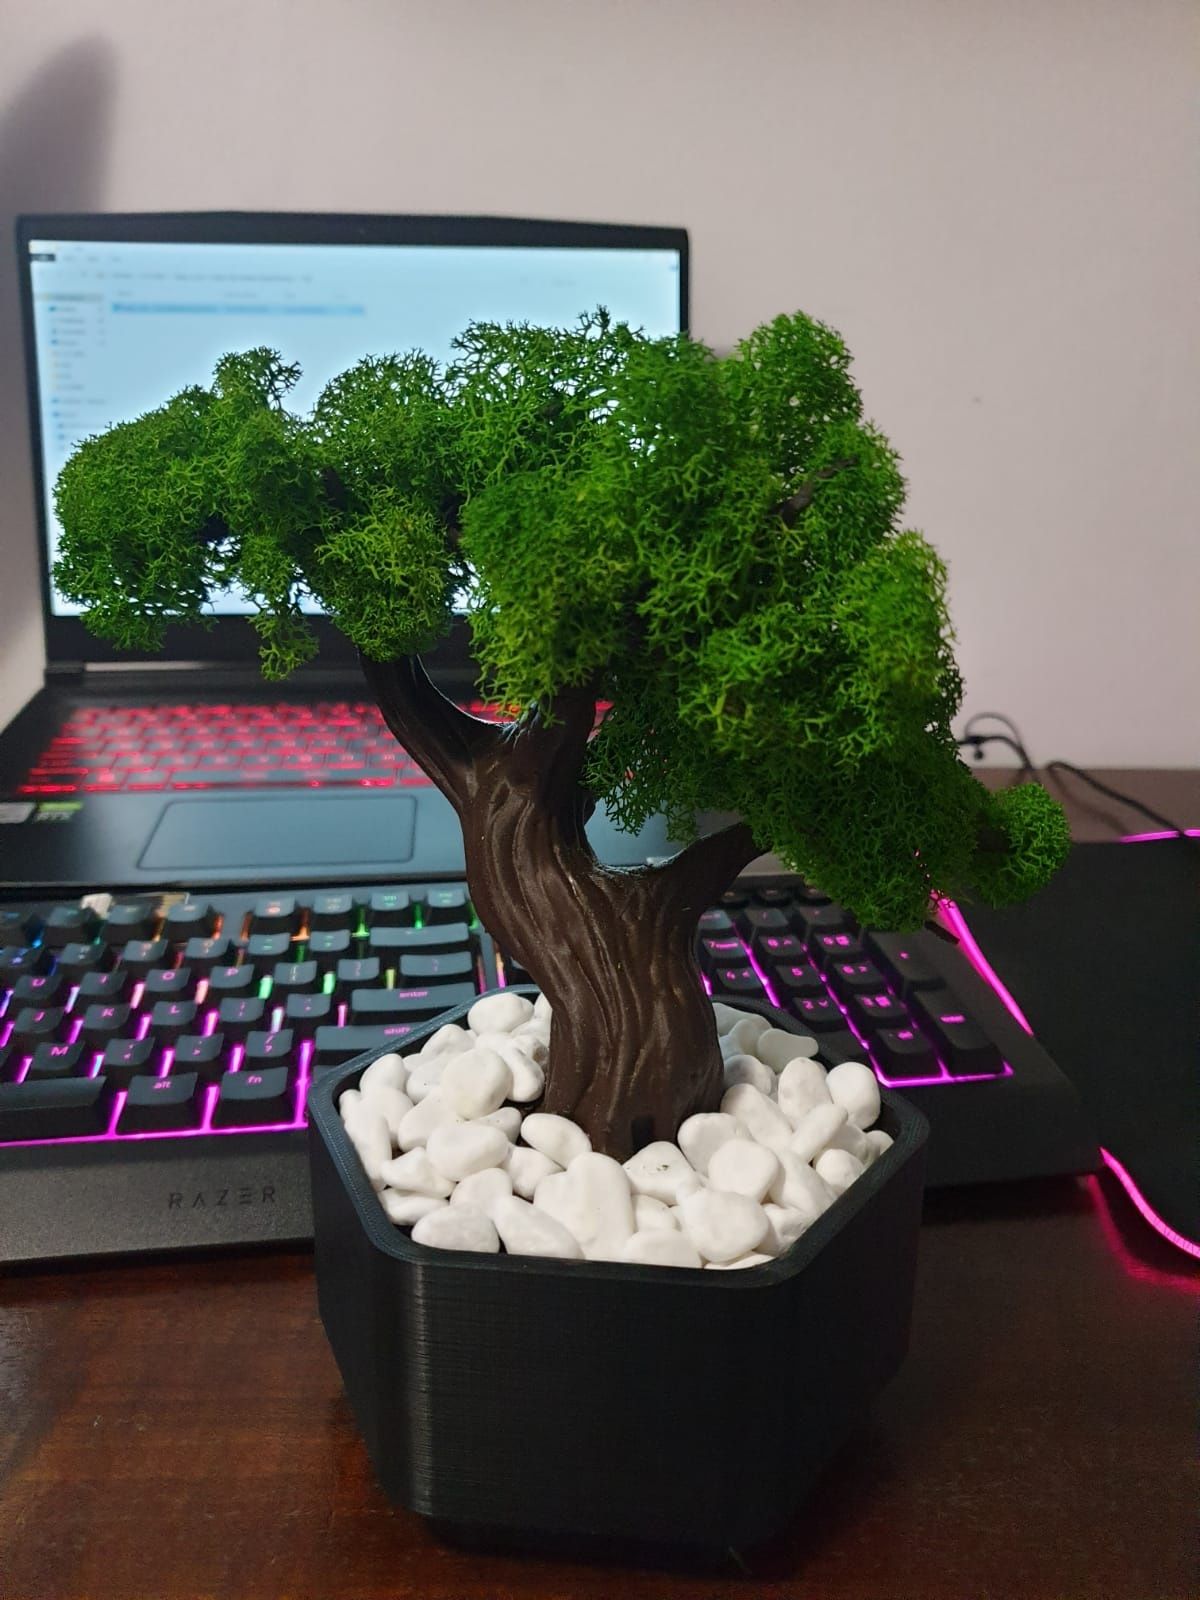 Copac/ bonsai printat 3D